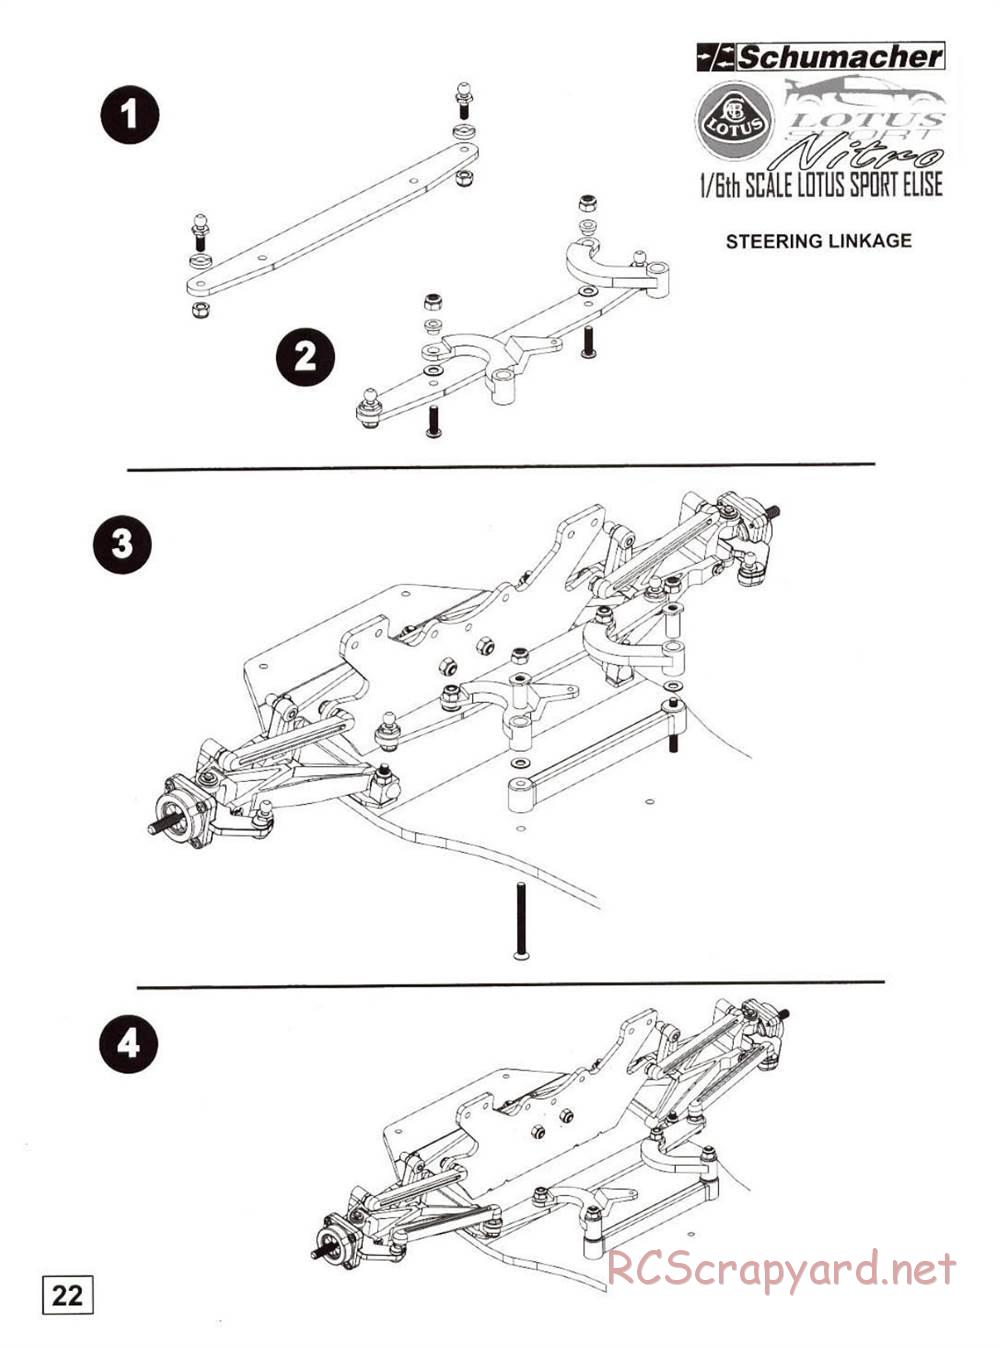 Schumacher - Big 6 Lotus Nitro - Manual - Page 17